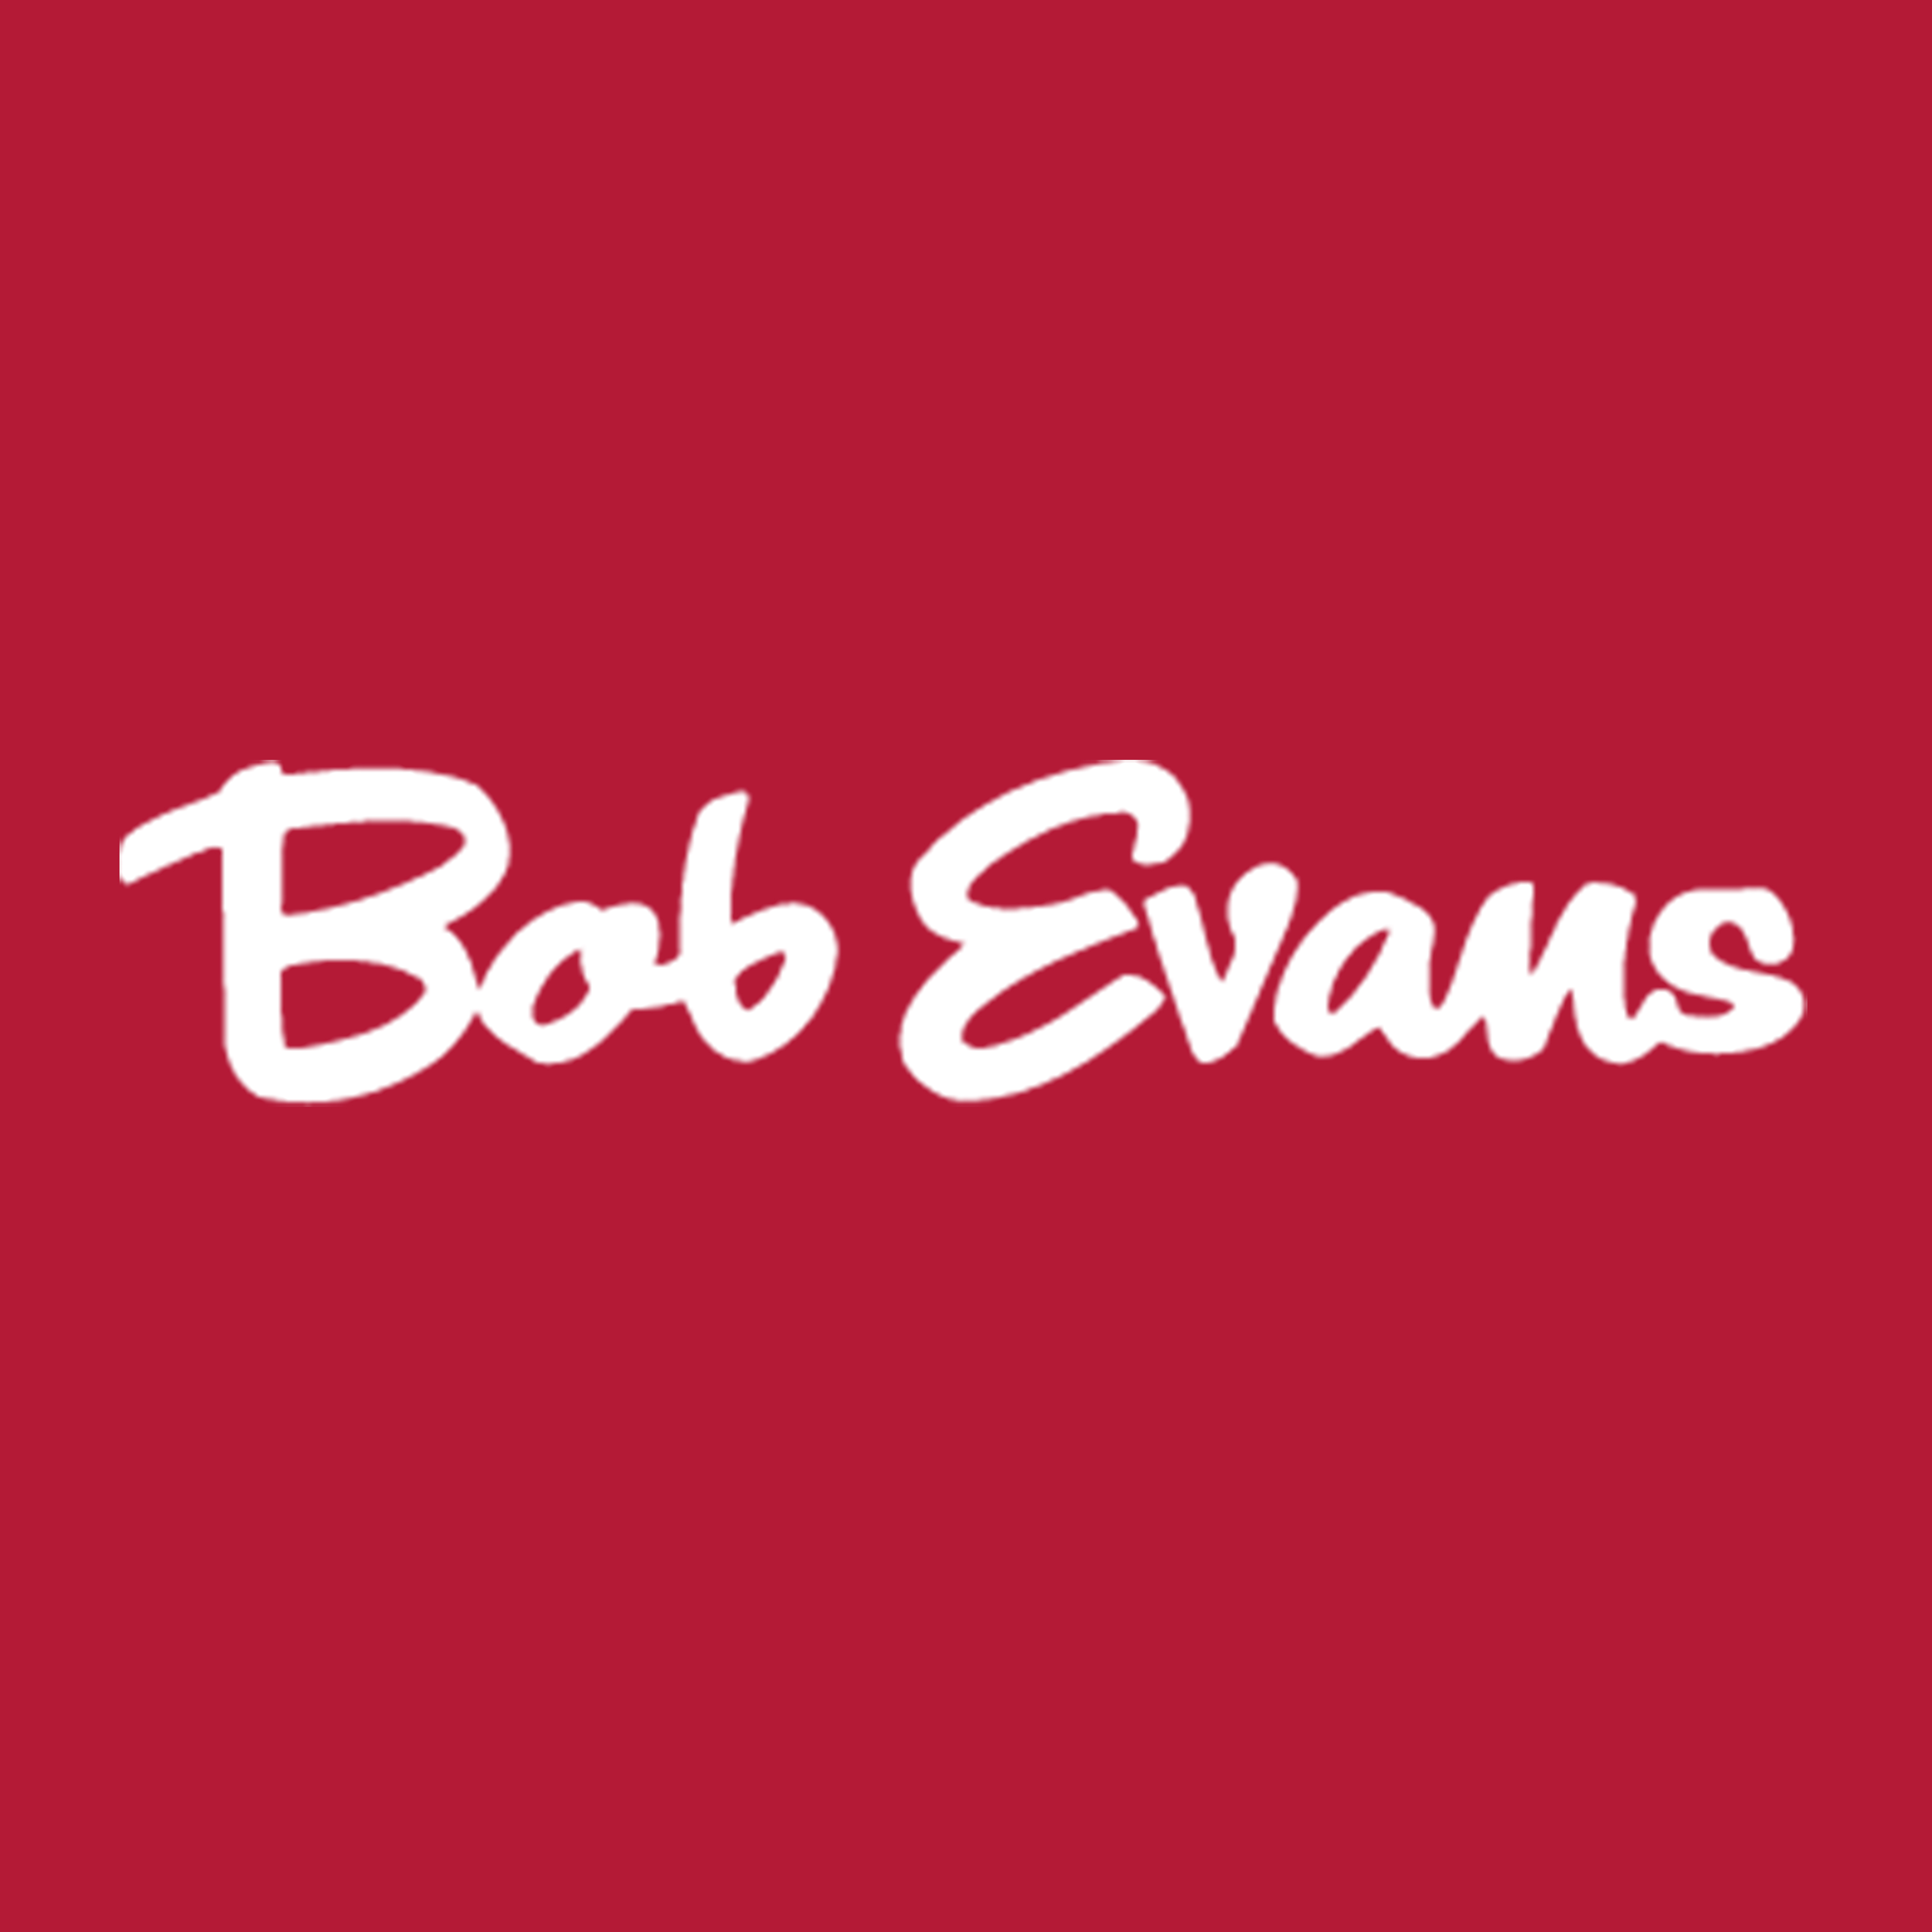 Bob Evans coupon codes